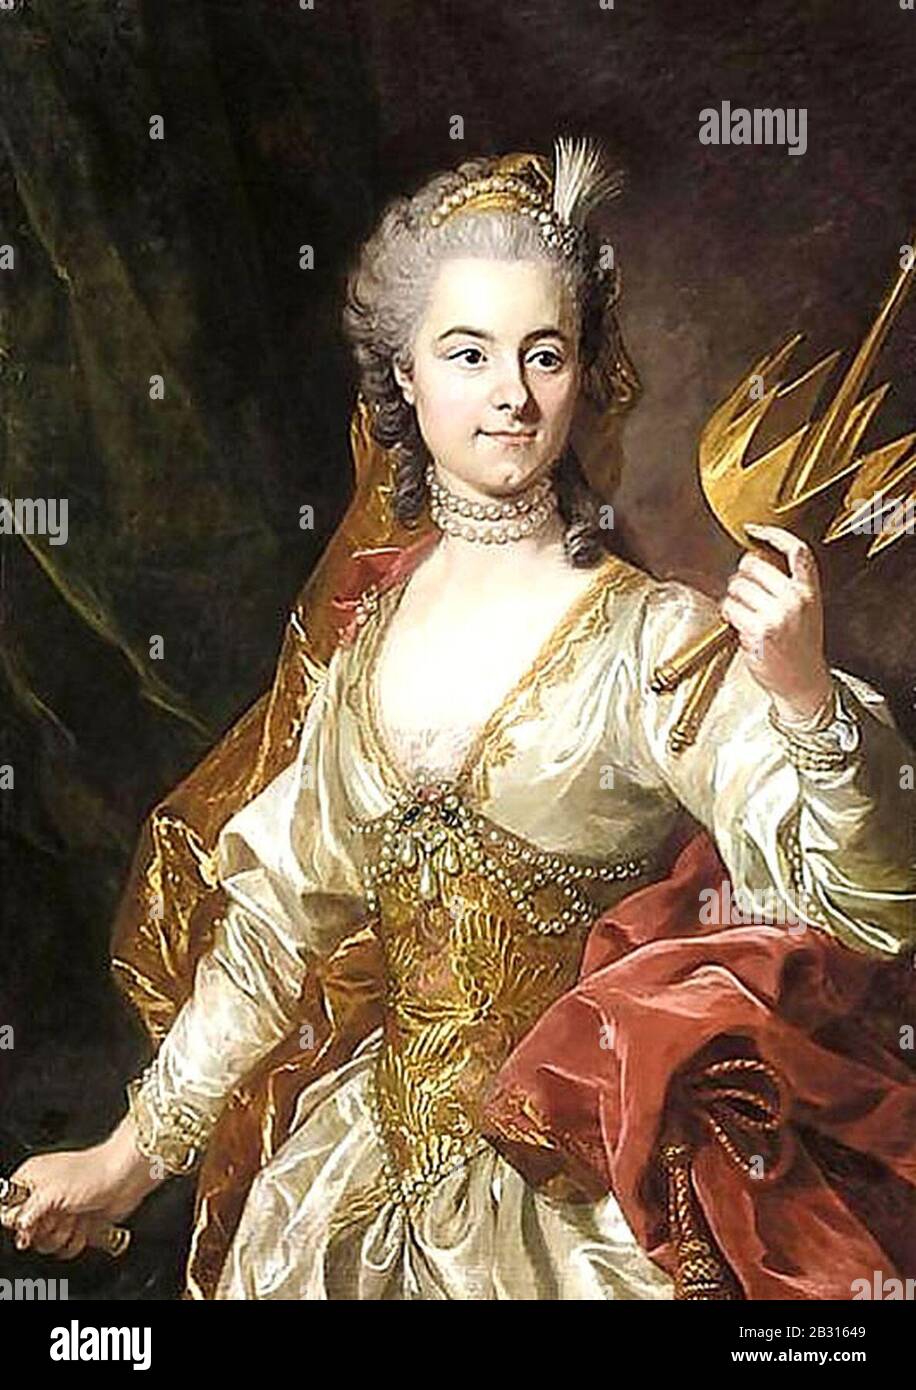 Genevieve de Malboissiere as Melpomene, Muse Of Tragedy by Louis-Michel van Loo. Stock Photo